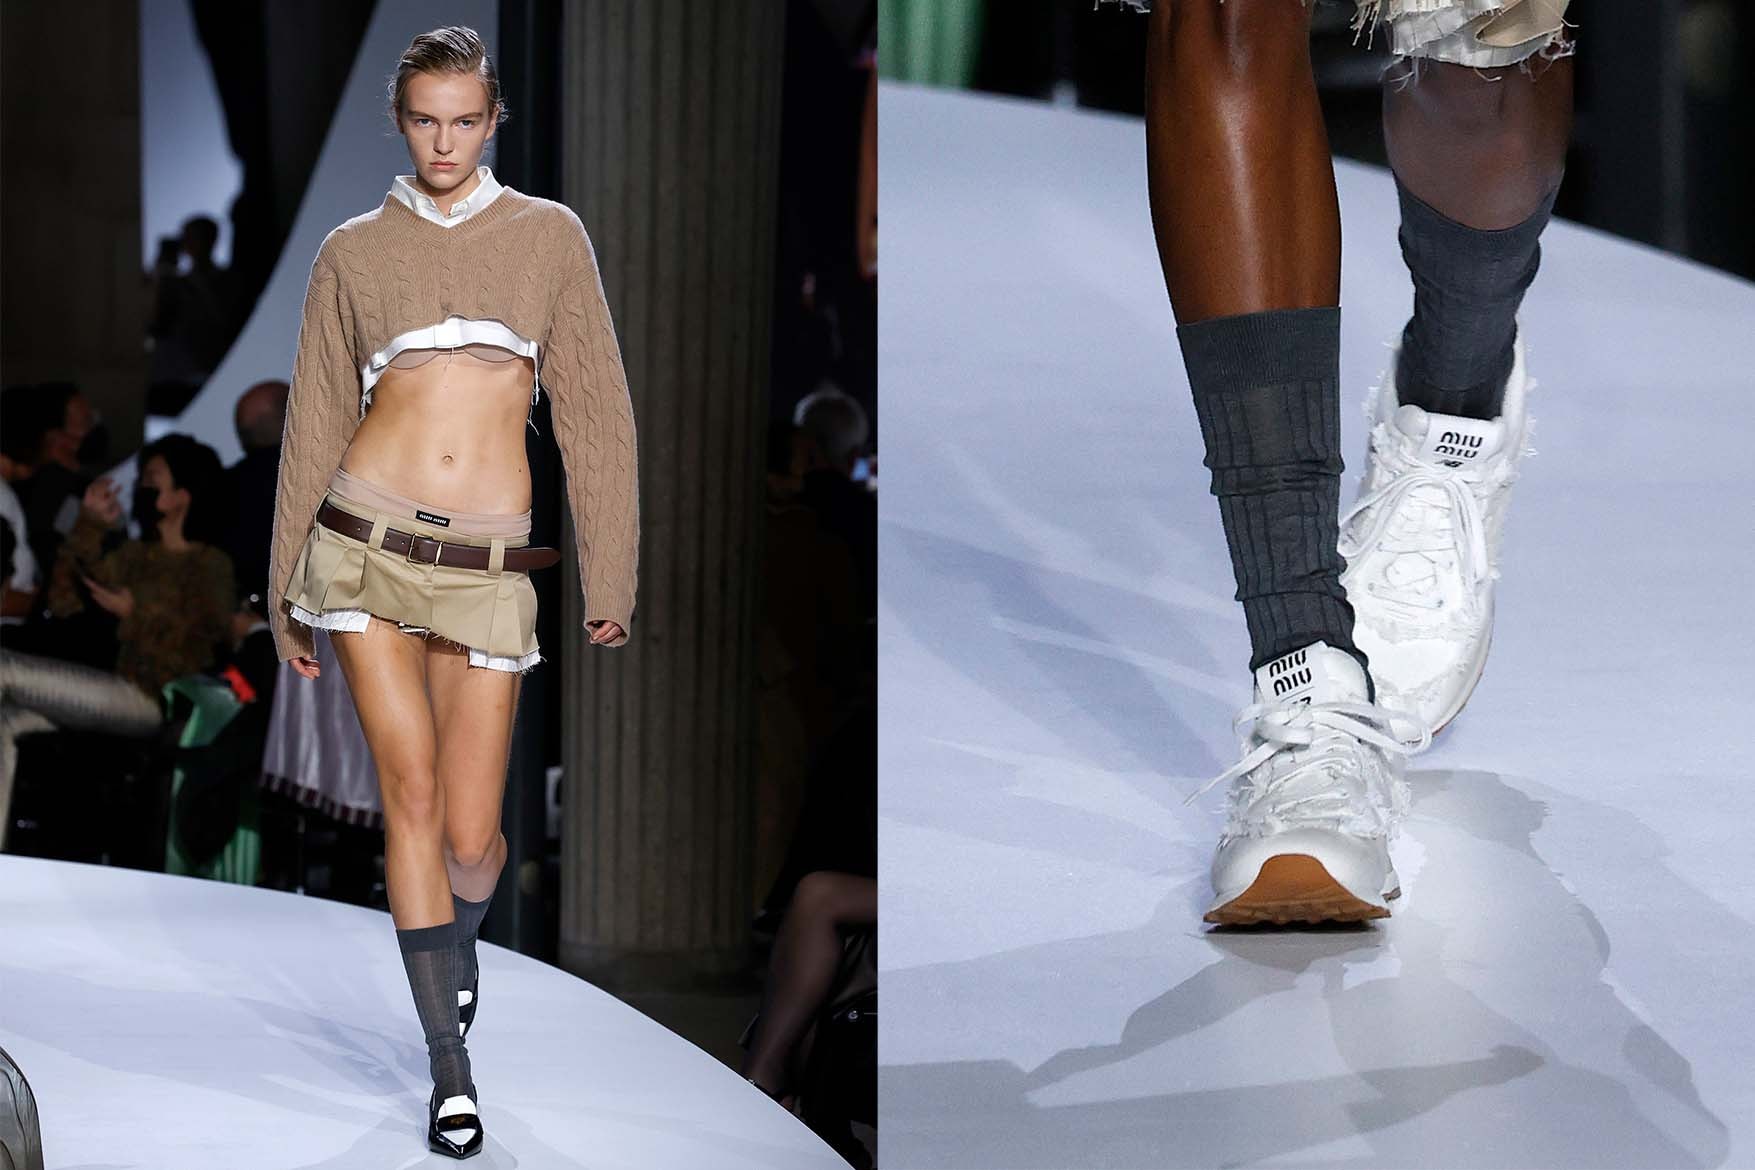 miu-miu-brings-low-waist-cut-and-collaboration-with-new-balance-into-paris-fashion-week-01